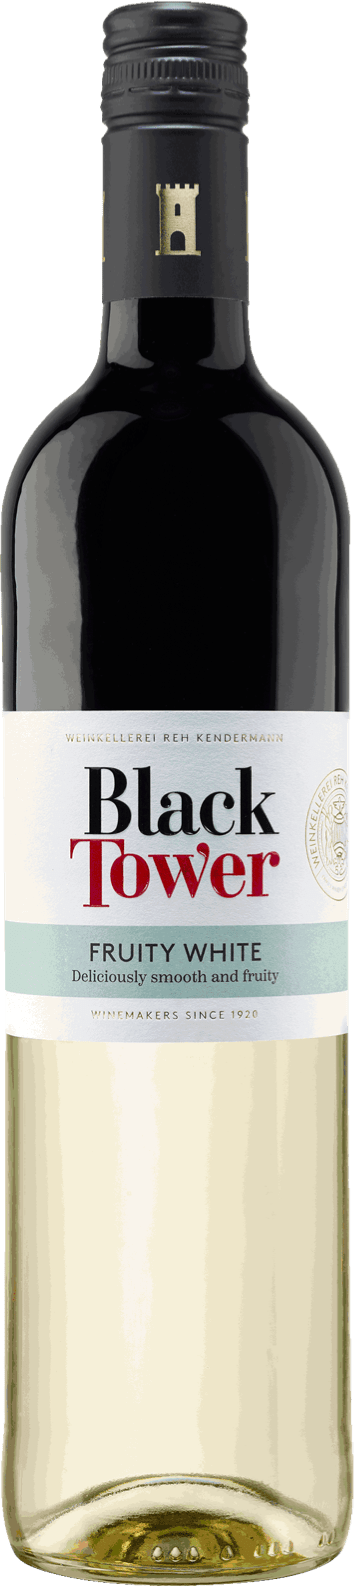 Black Tower Fruity White